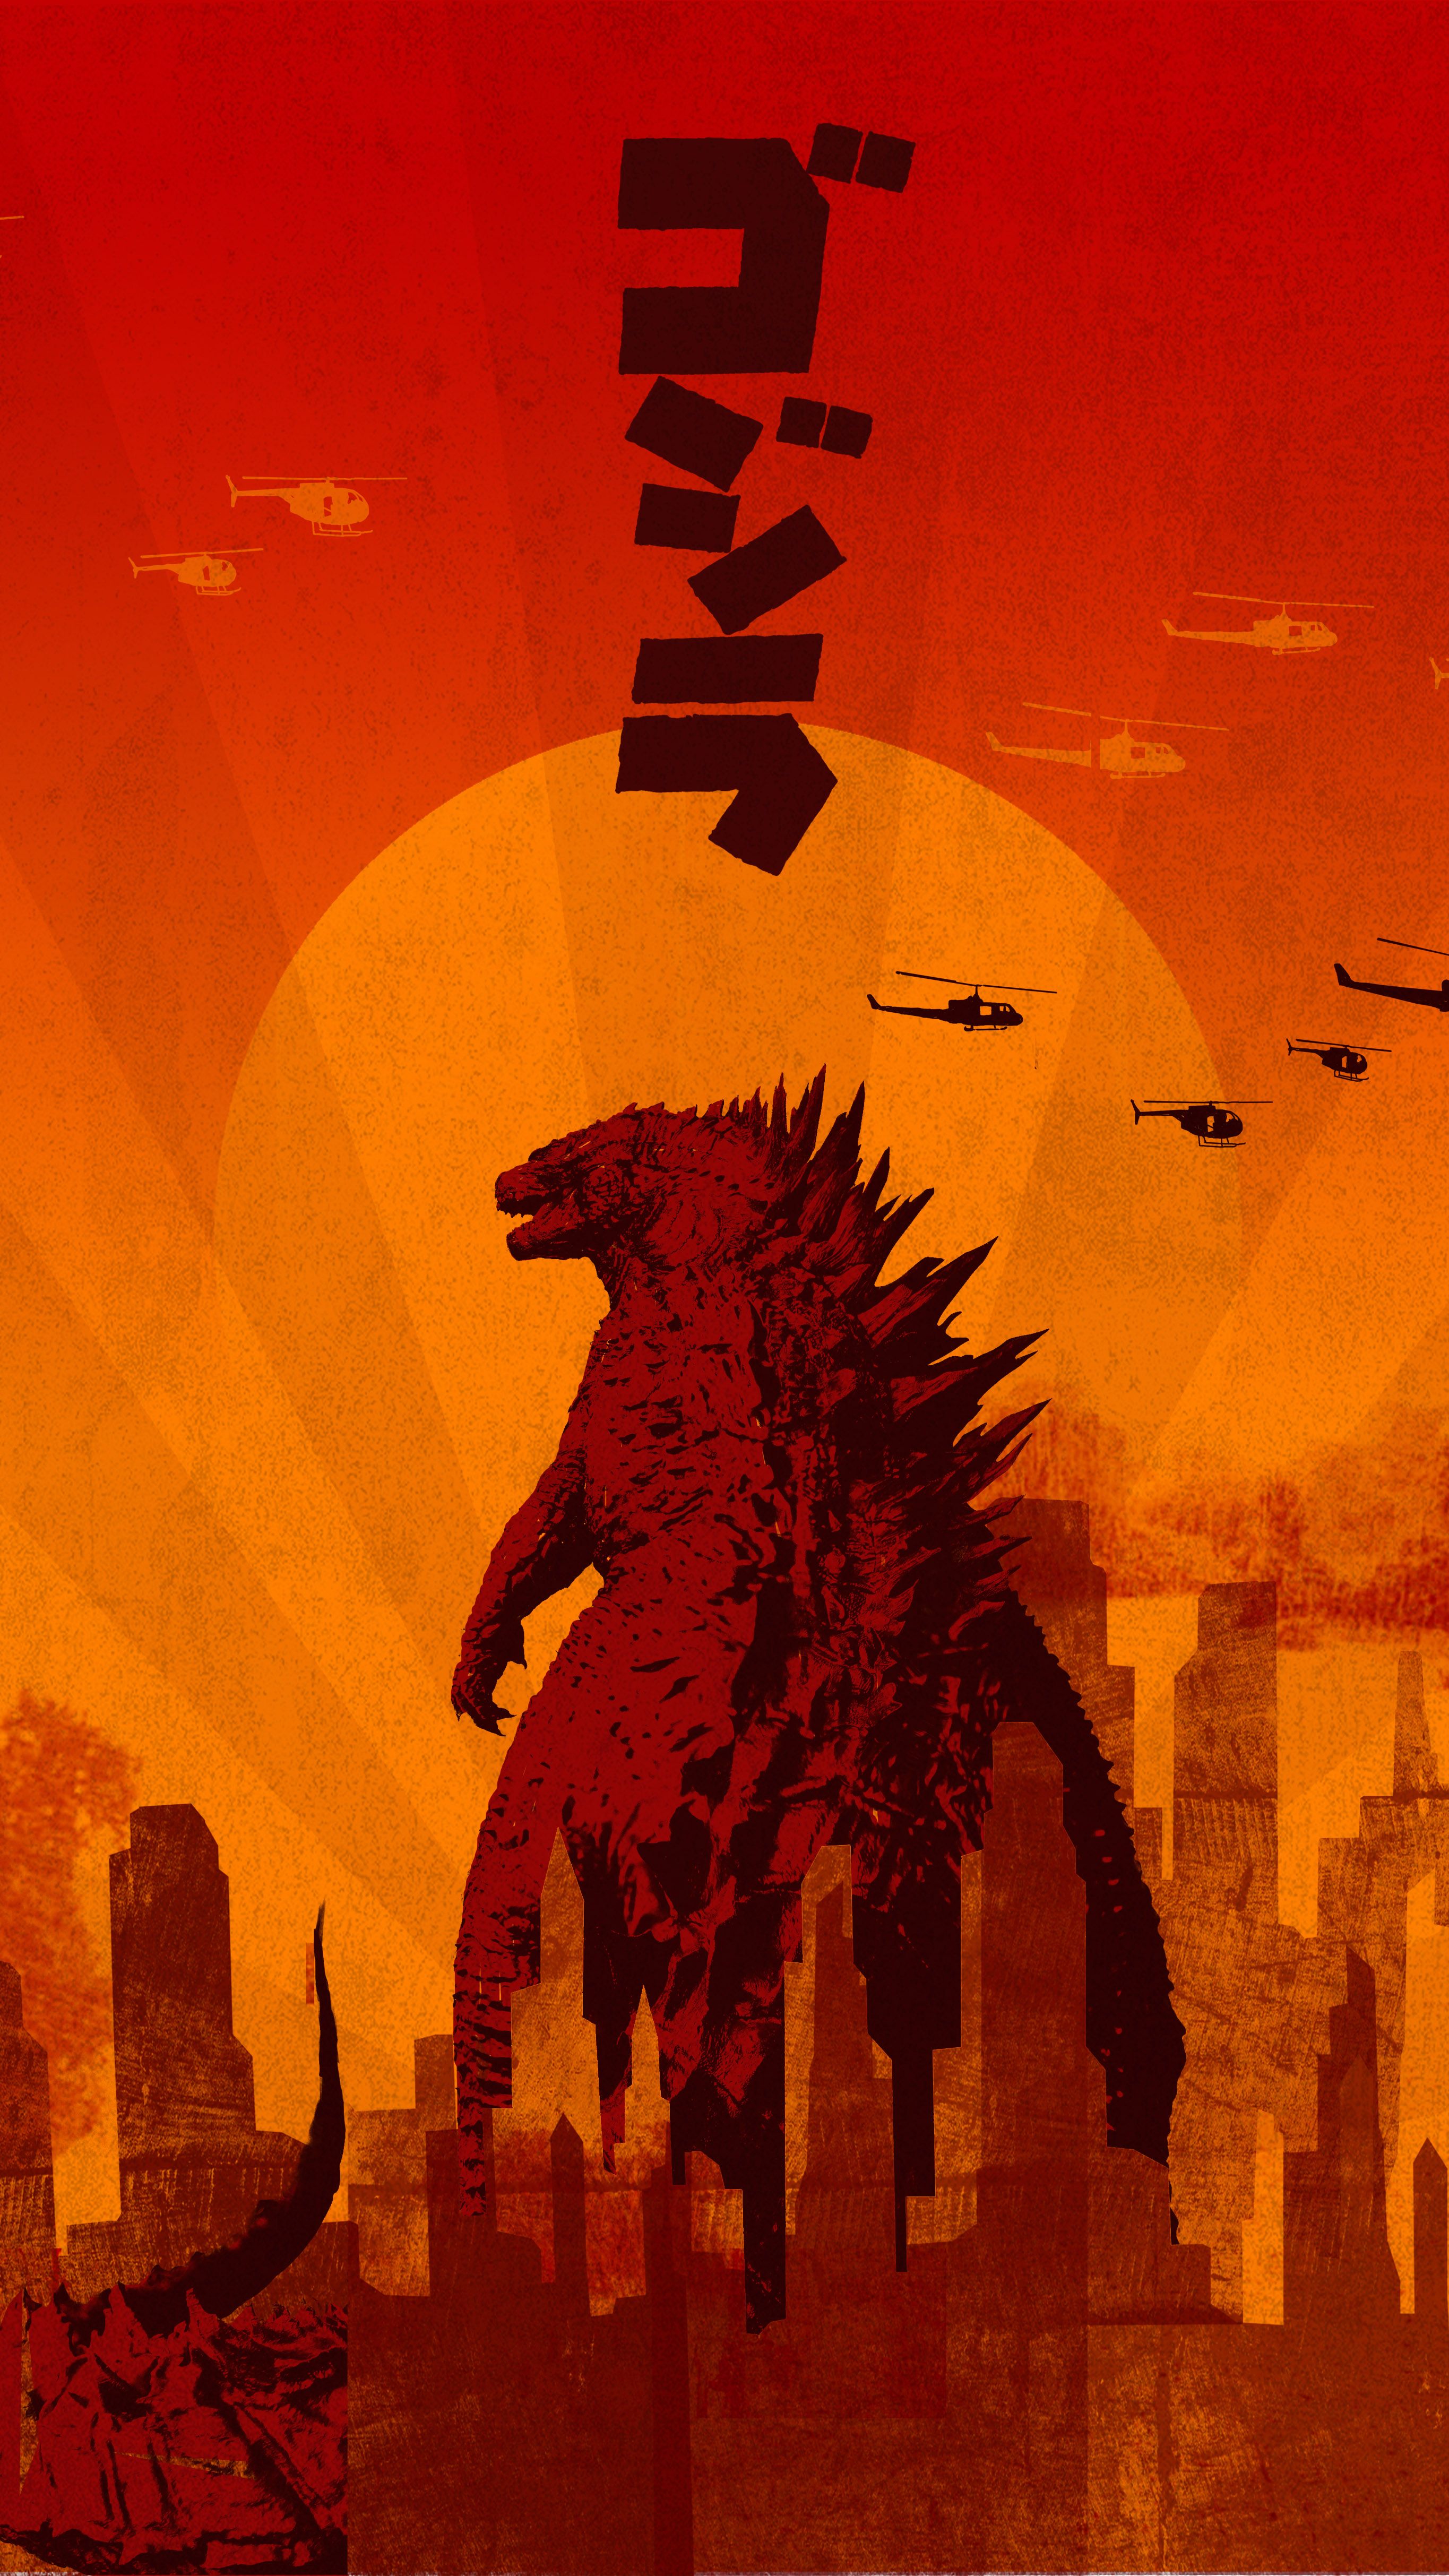 Wallpaper, Phone Wallpaper pt.2. Godzilla wallpaper, Cartoon wallpaper hd, Kaiju art